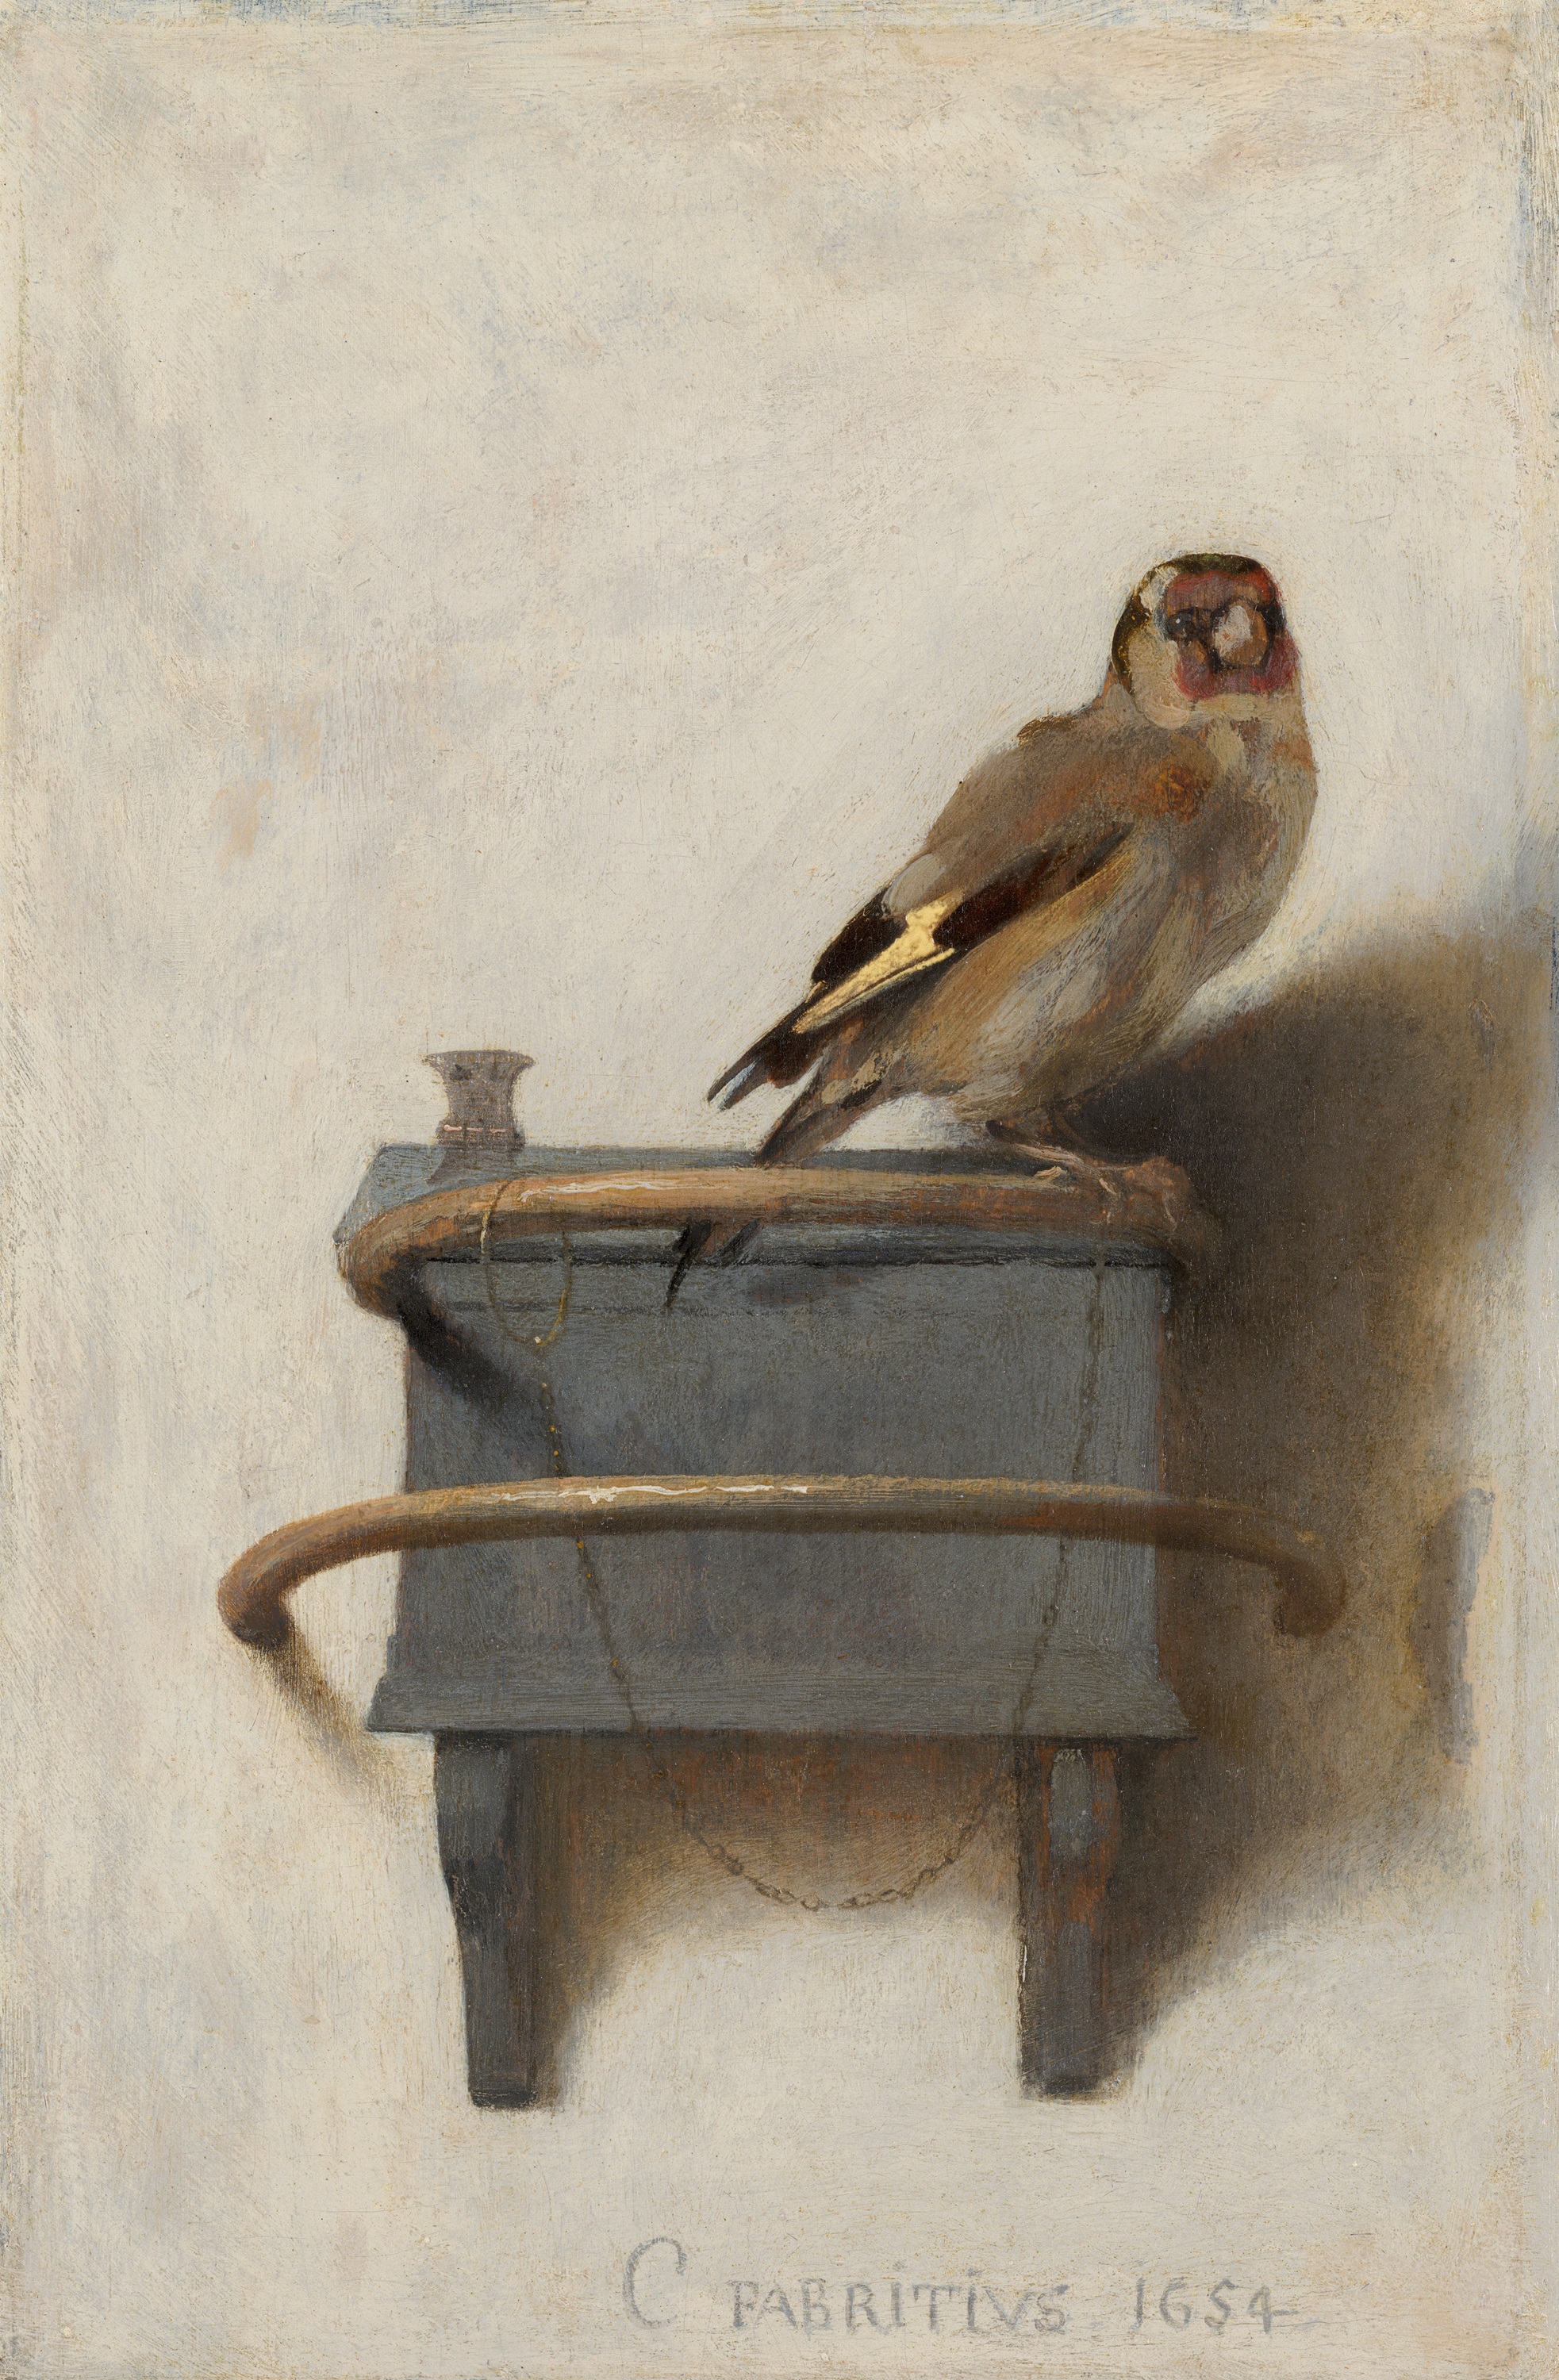 金翅雀 by Carel Fabritius - 1654 - 34 x 23 cm 